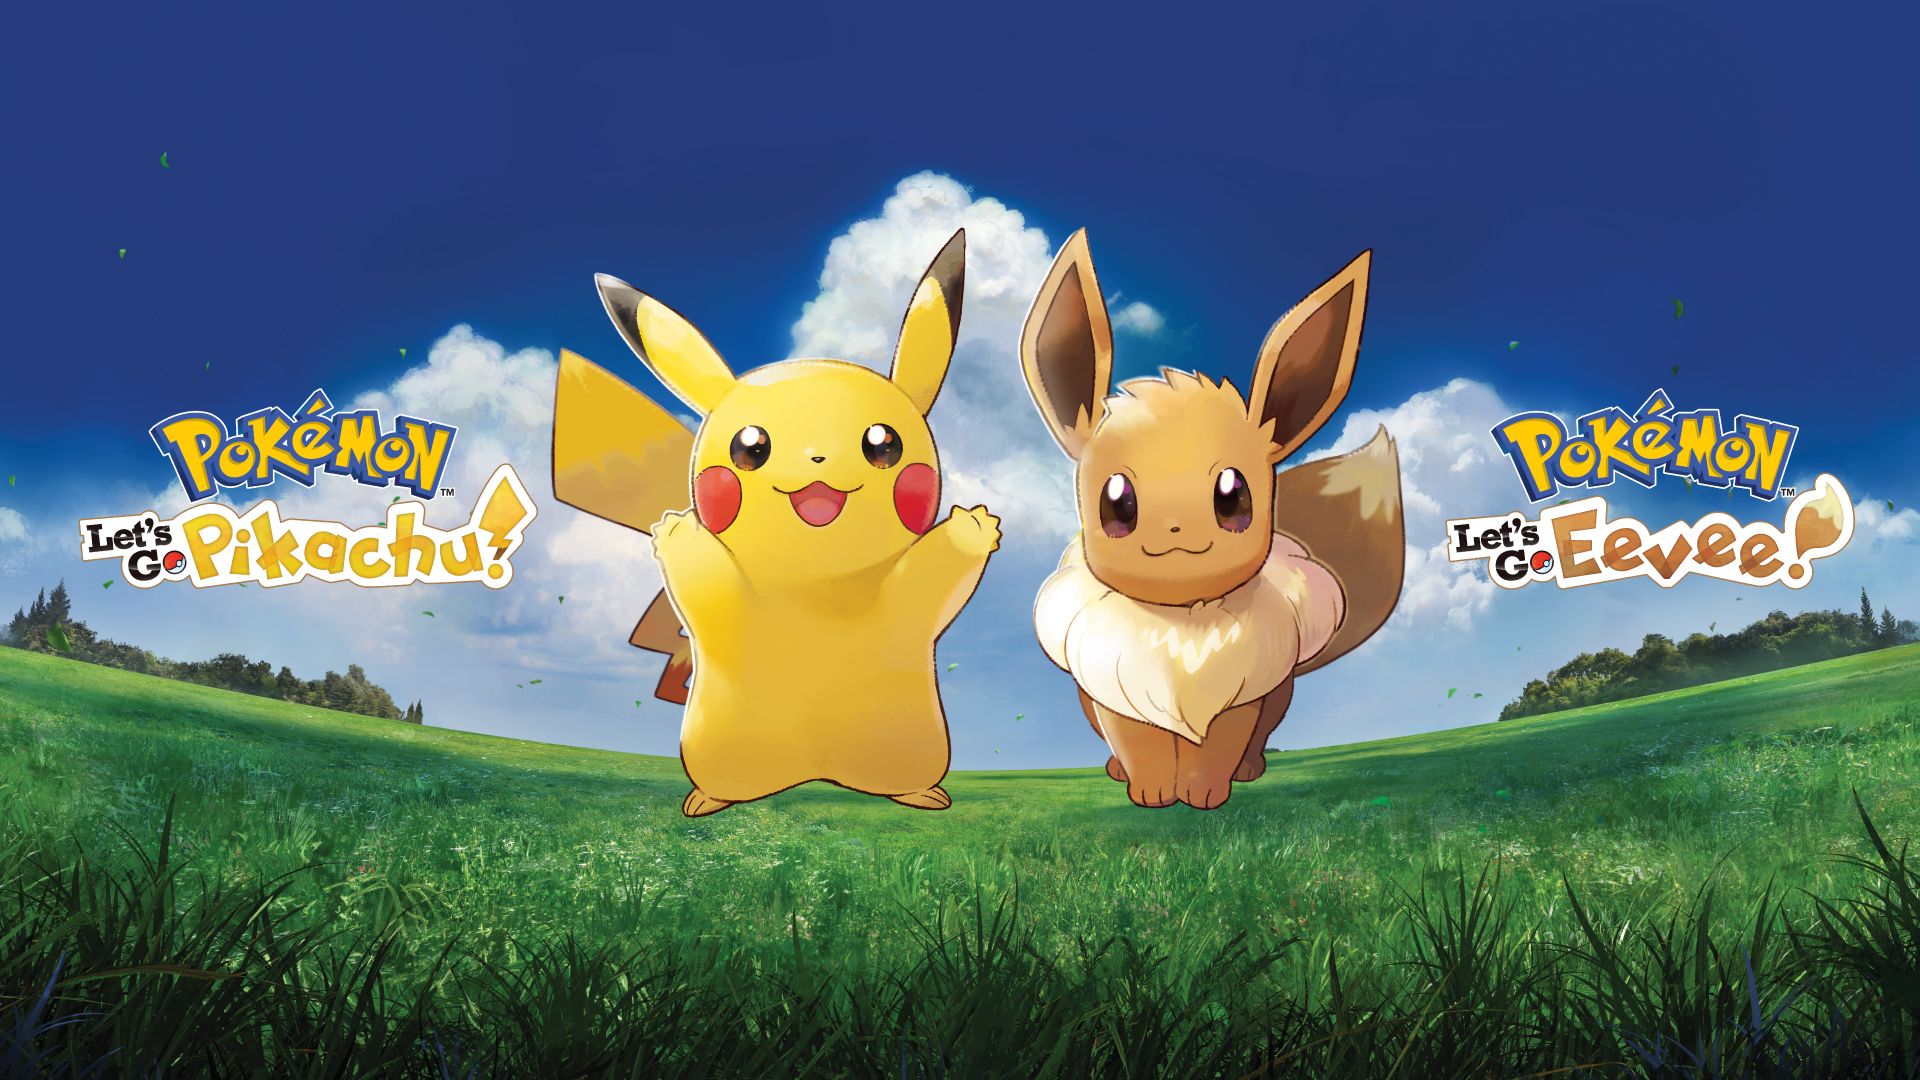 Pokémon: Let's Go Pikachu! & Let's Go Eevee! Wallpaper Anime Image Board